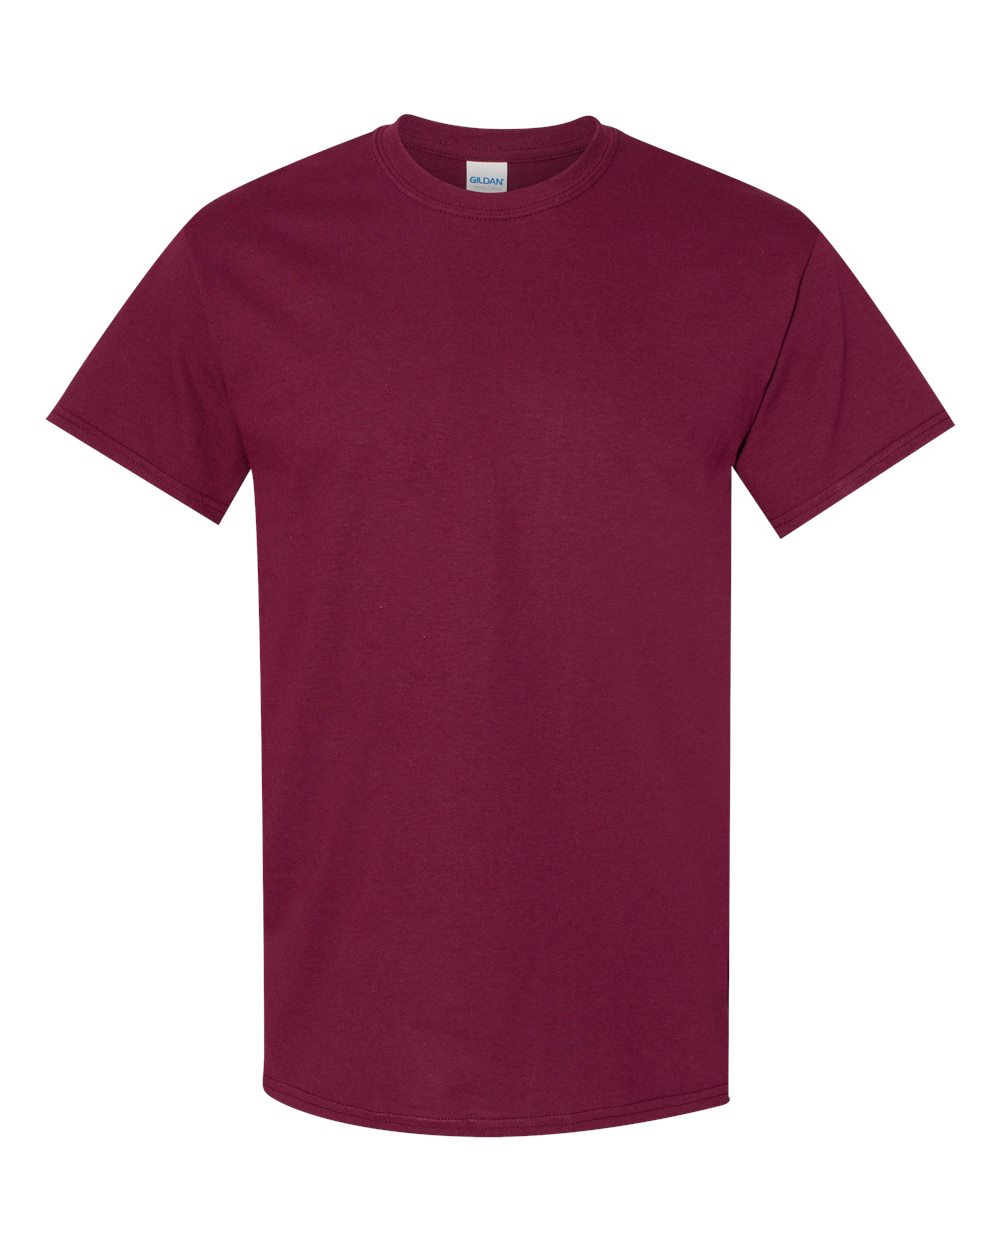 My Blood Type is IPA+ Adult Unisex Cotton T-Shirt | Cryin Creek